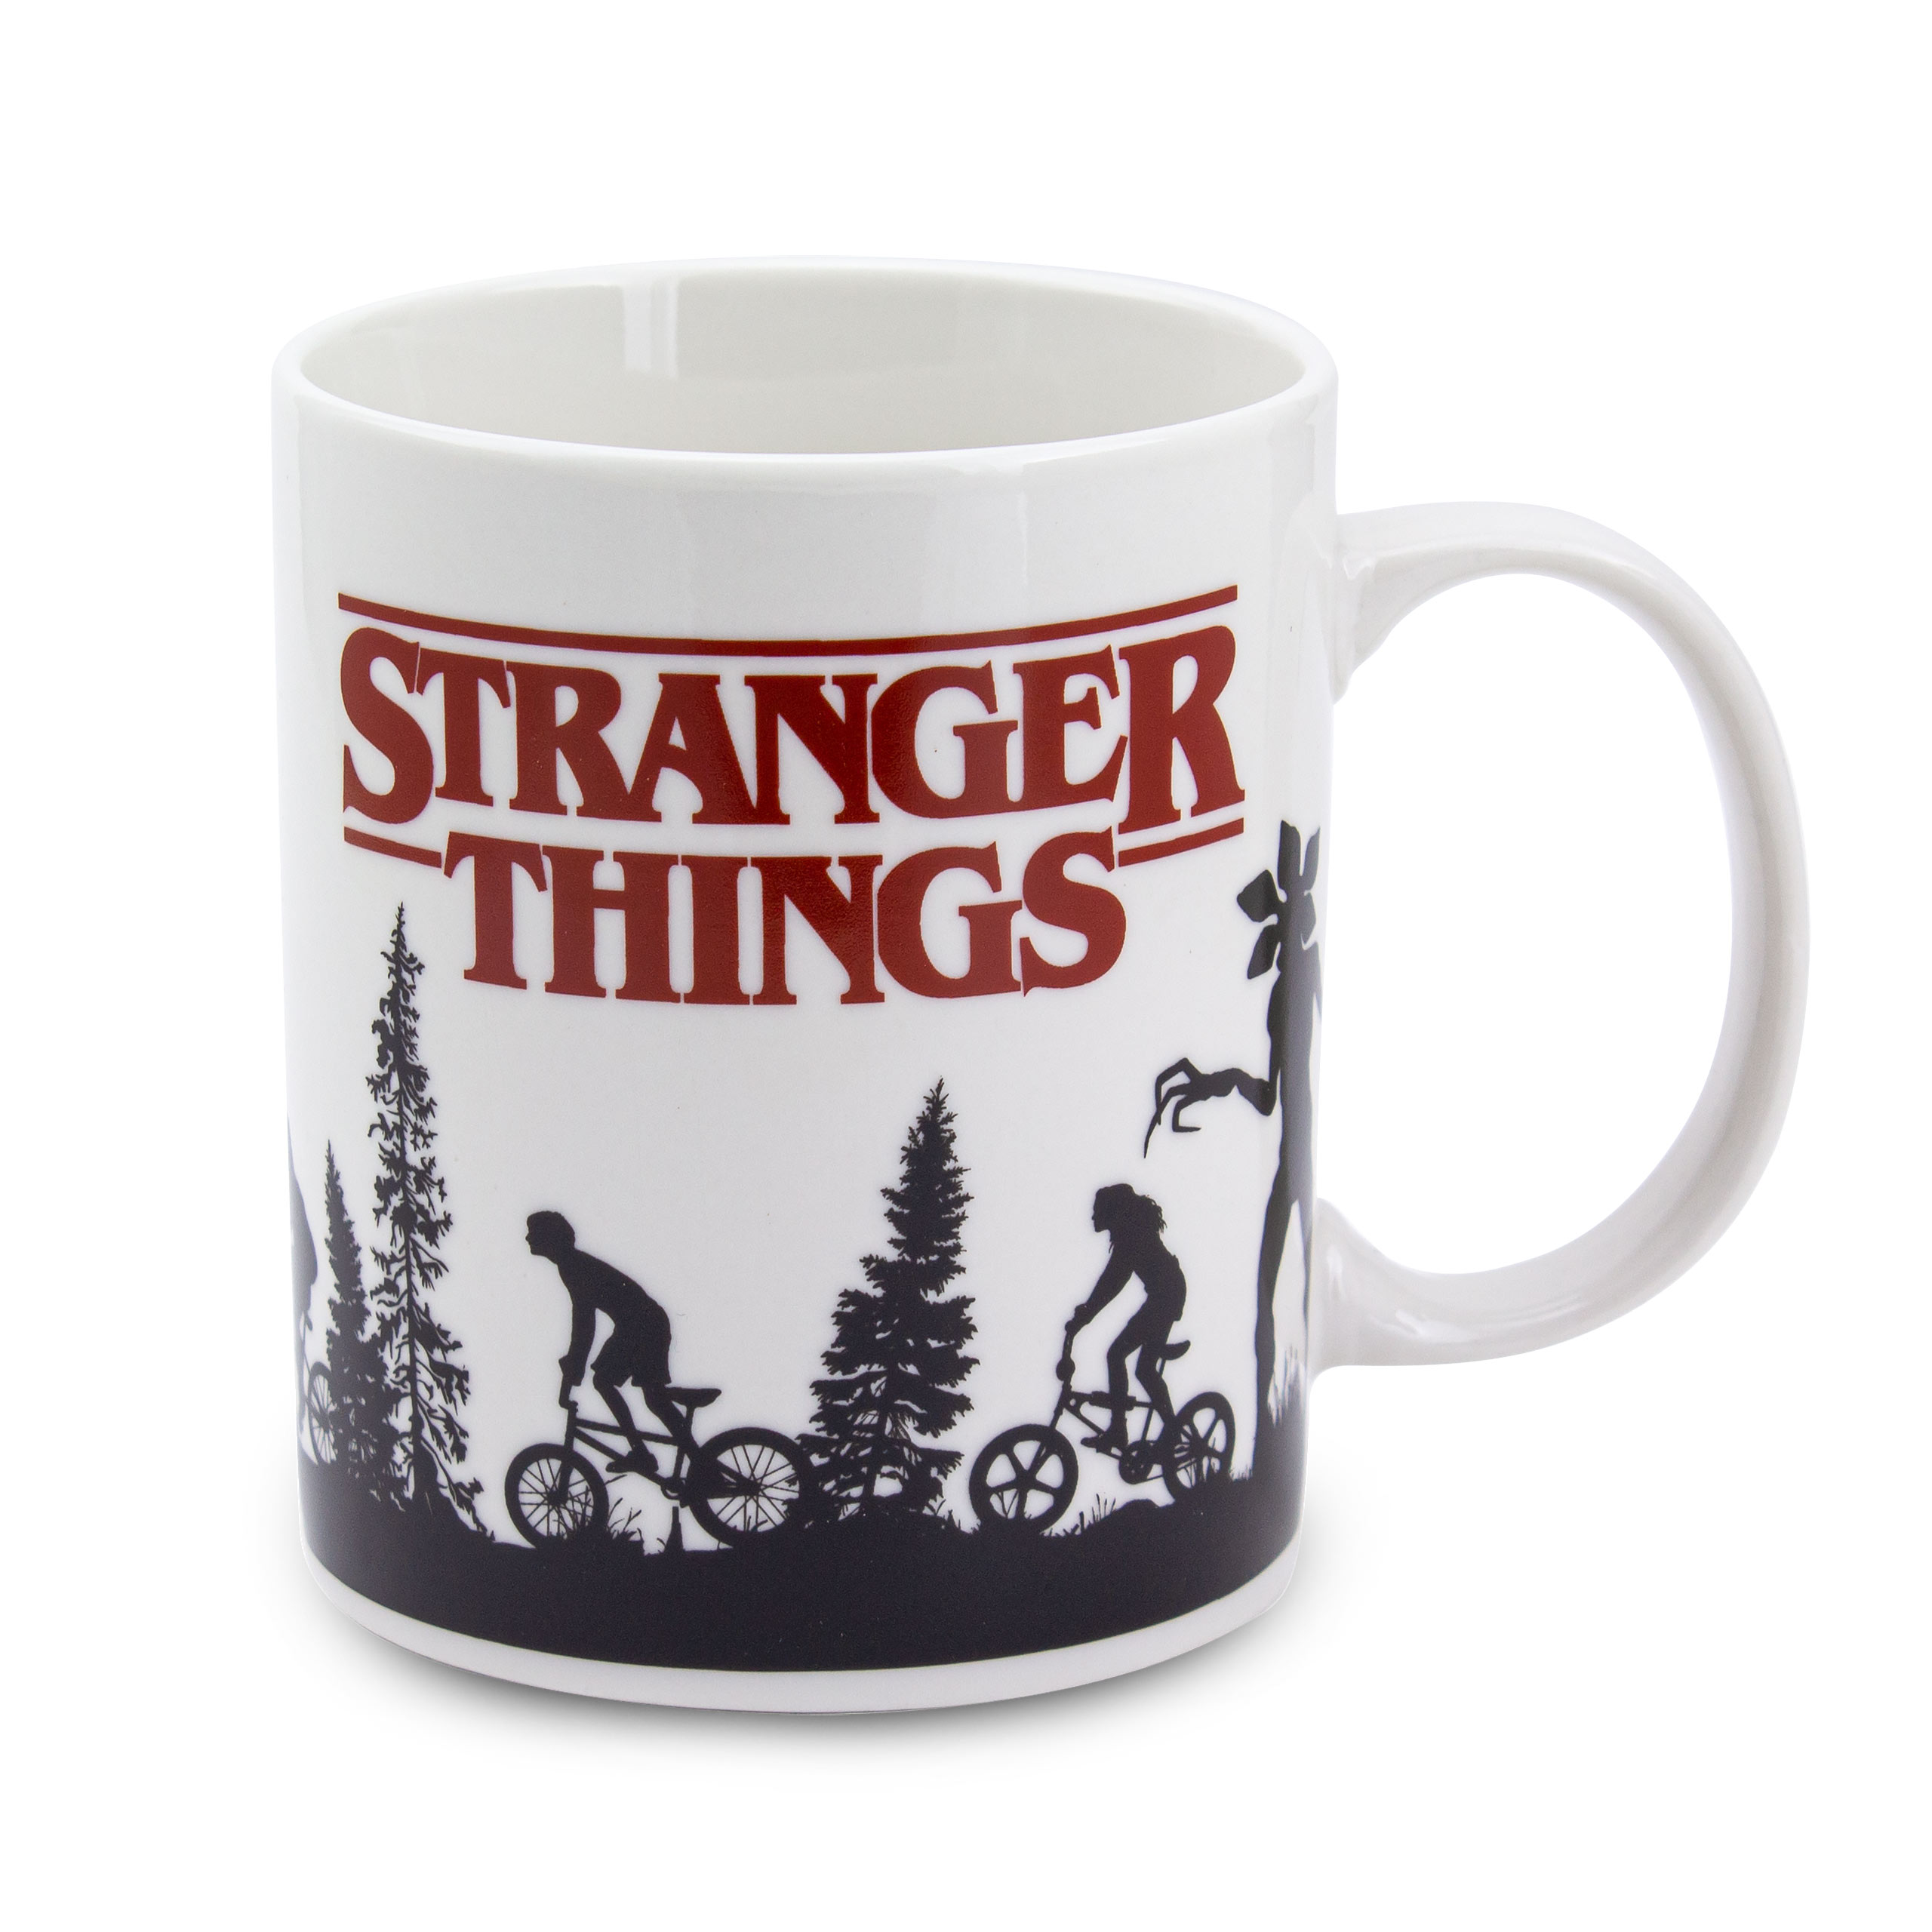 Stranger Things - Coffret cadeau